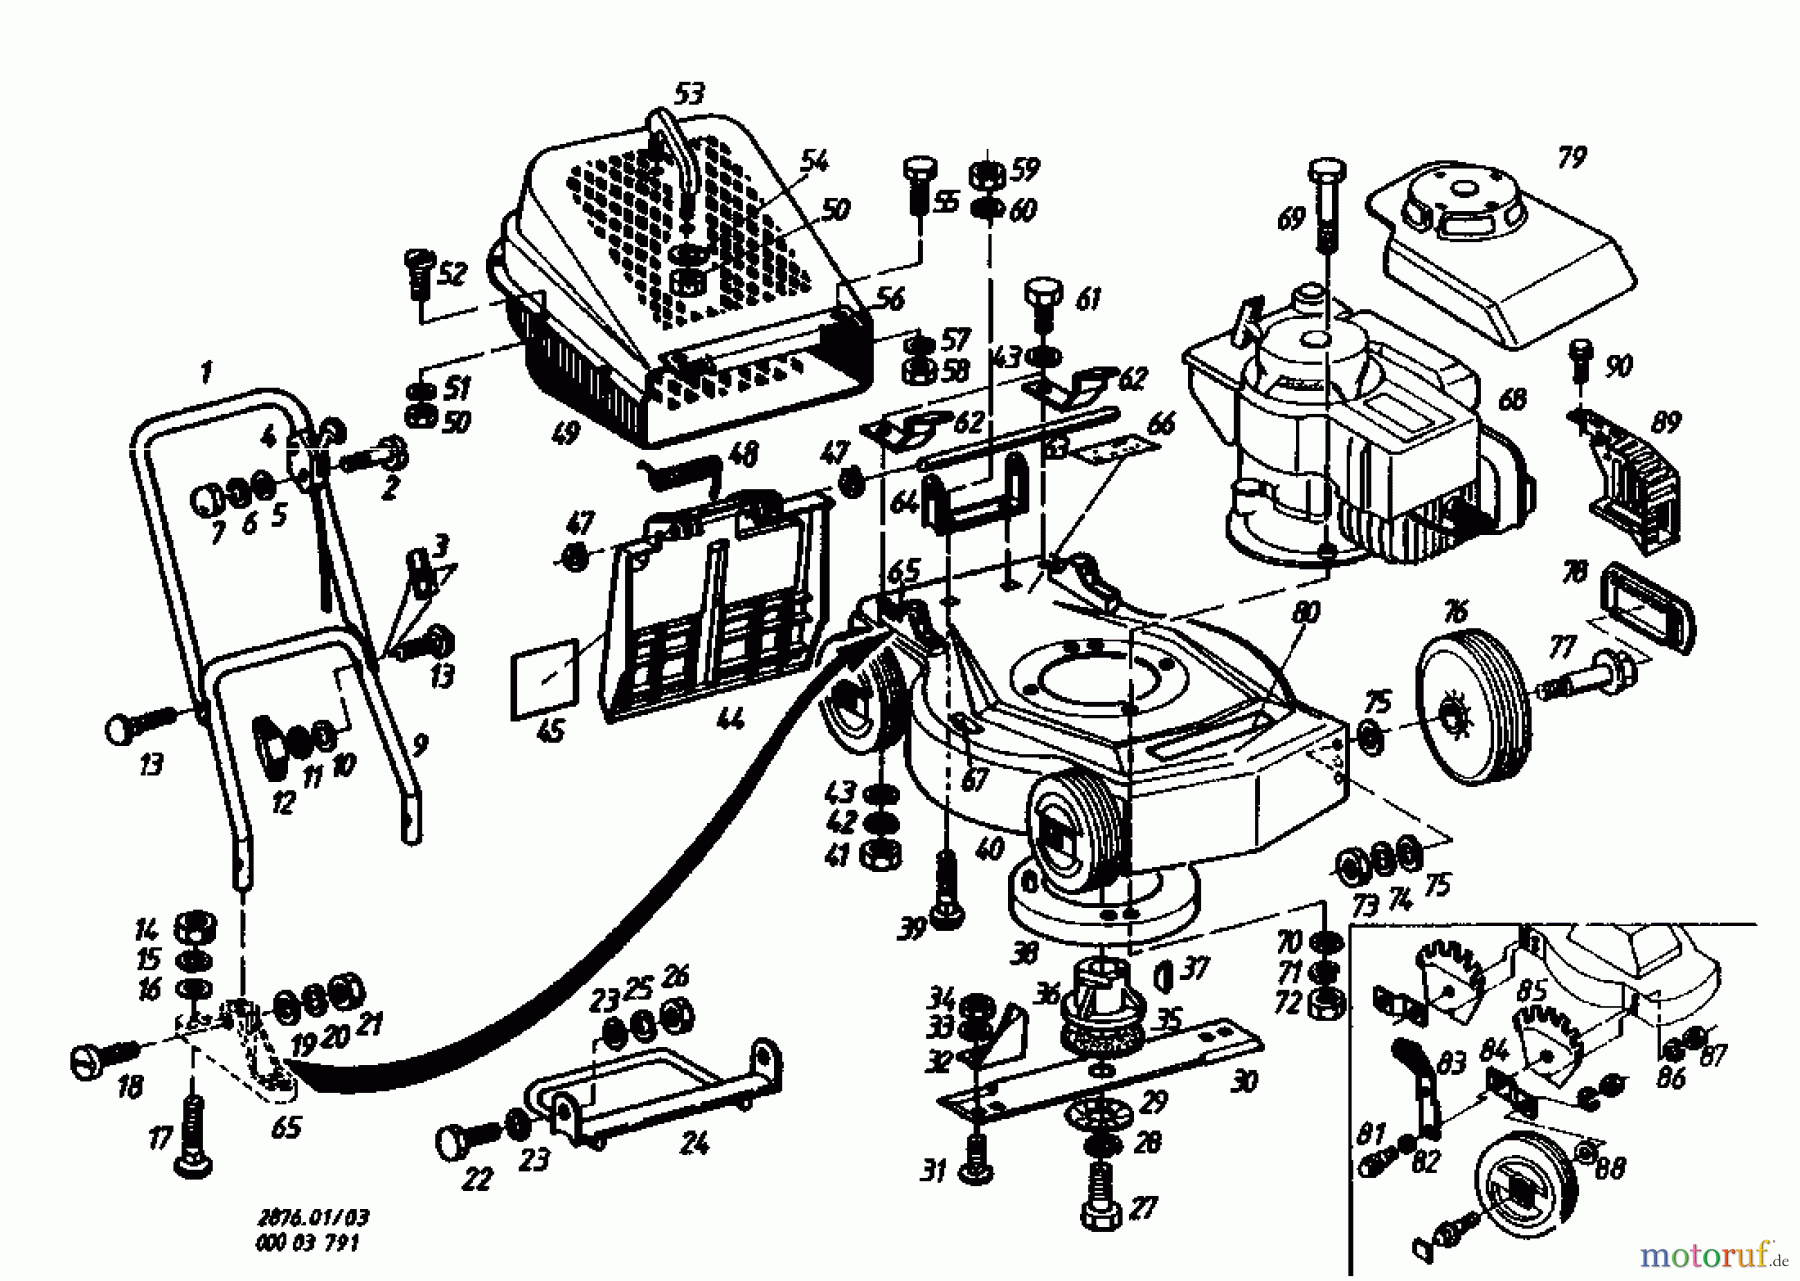  Gutbrod Motormäher TURBO 45 B 02876.01  (1985) Grundgerät